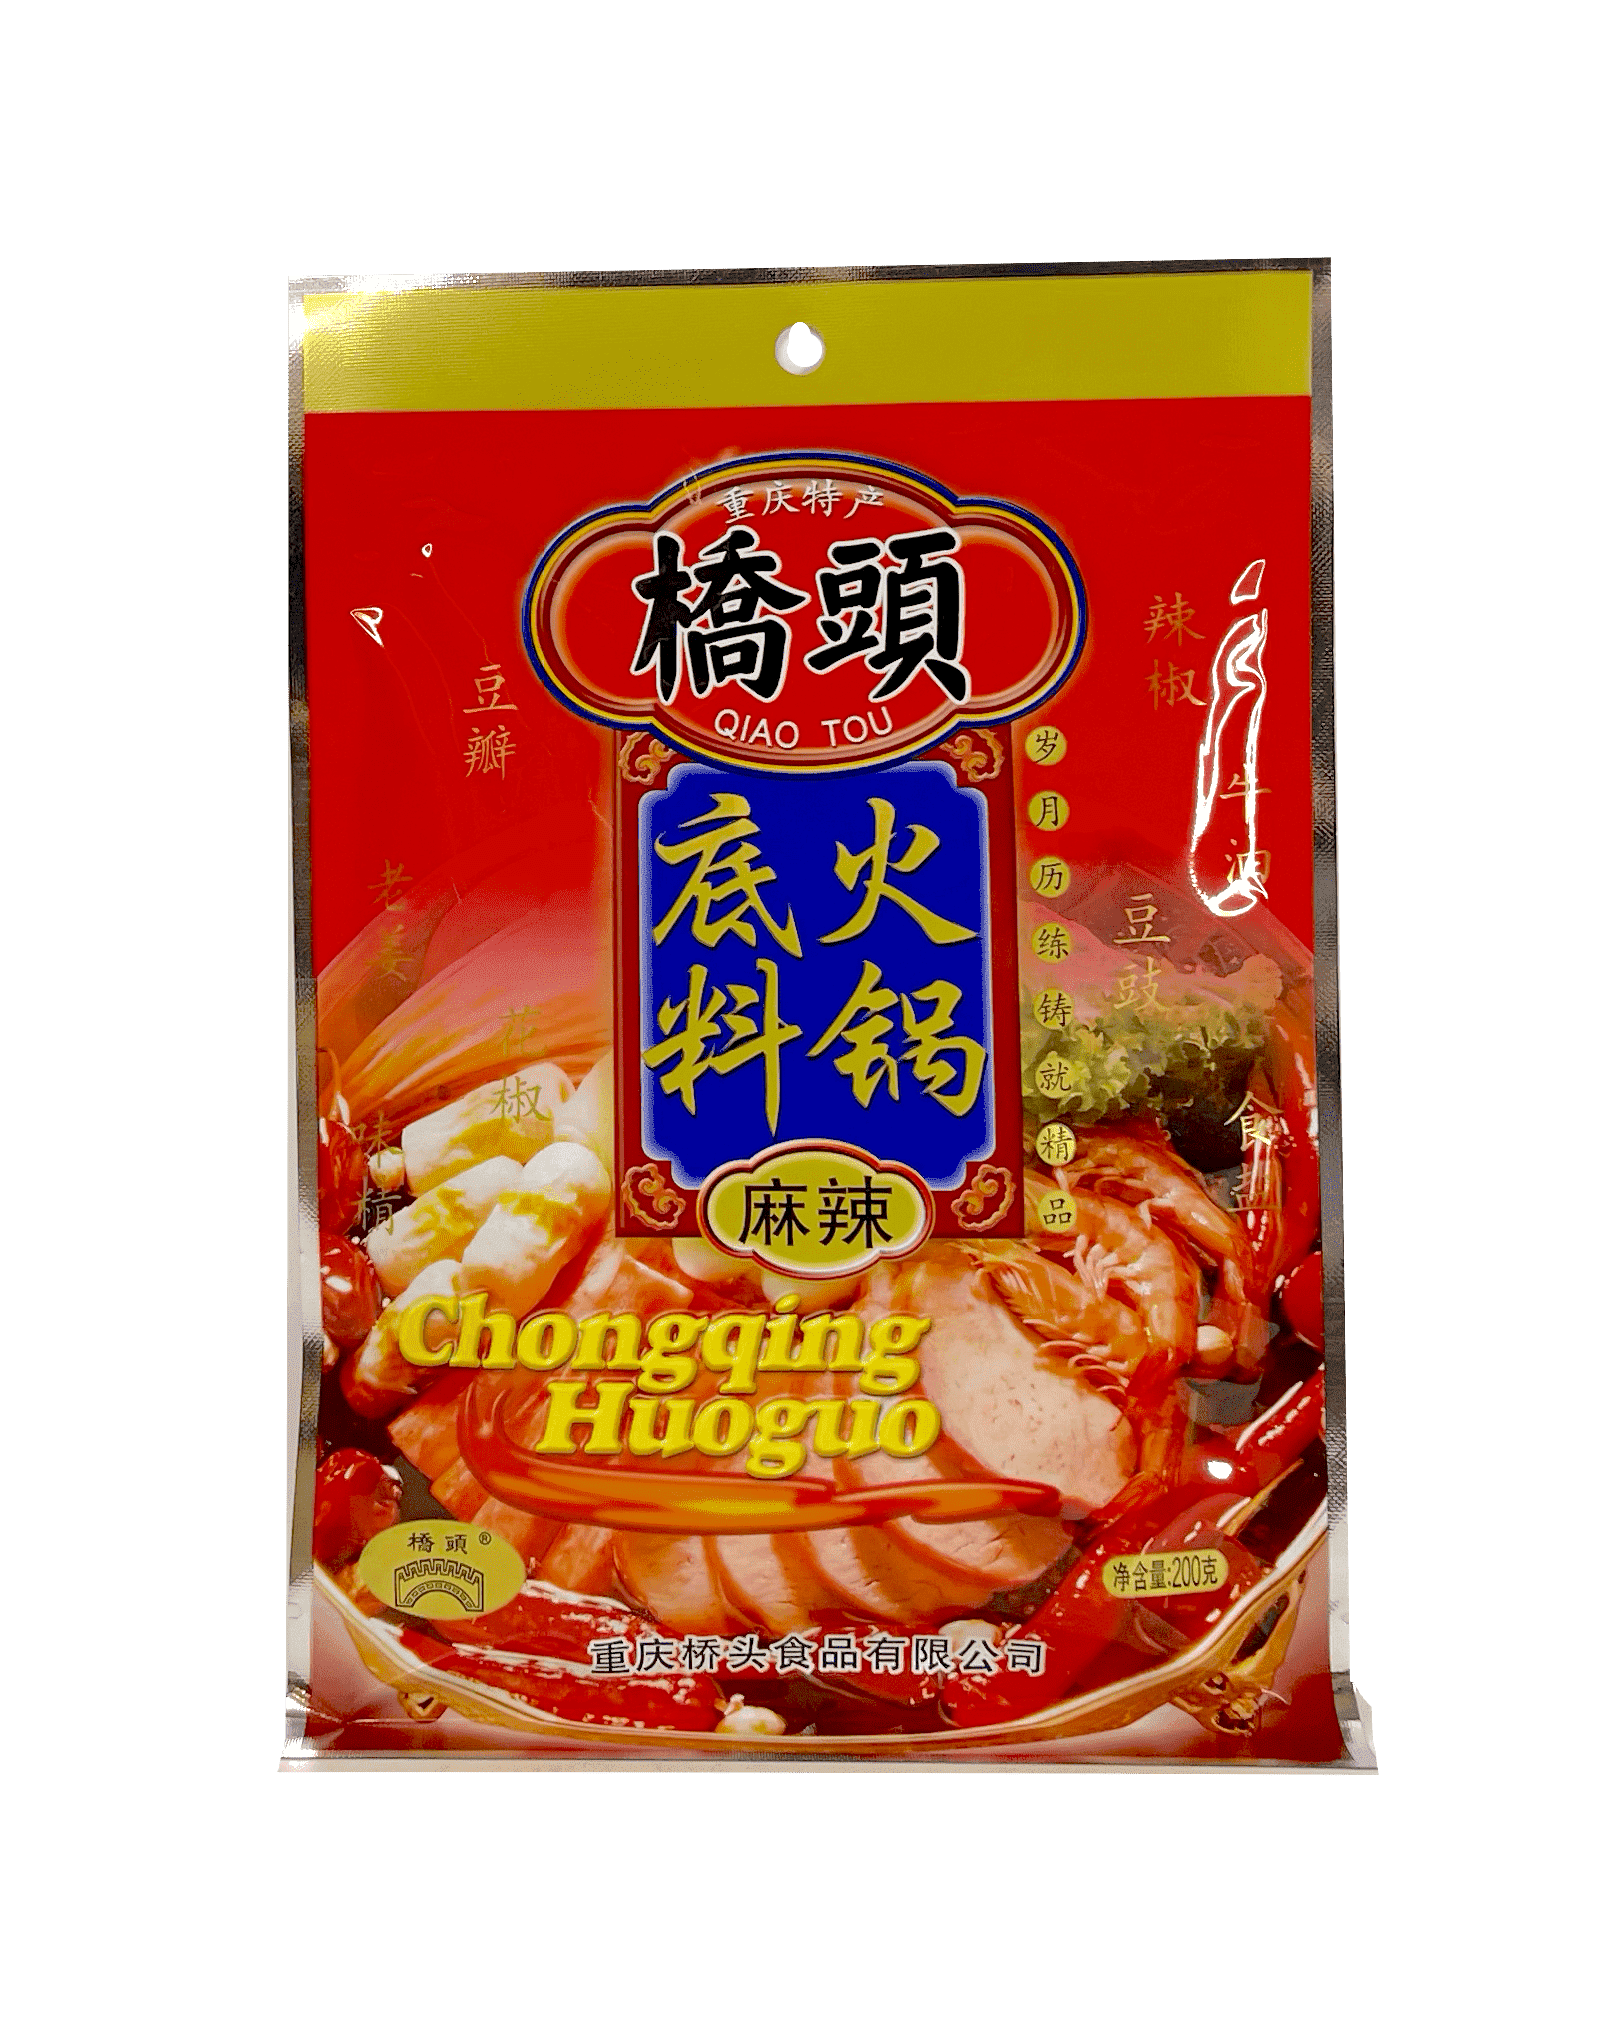 Hotpot Krydda Hot/Spicy 200g Chongqing MLHGDL Qiao Tou Kina